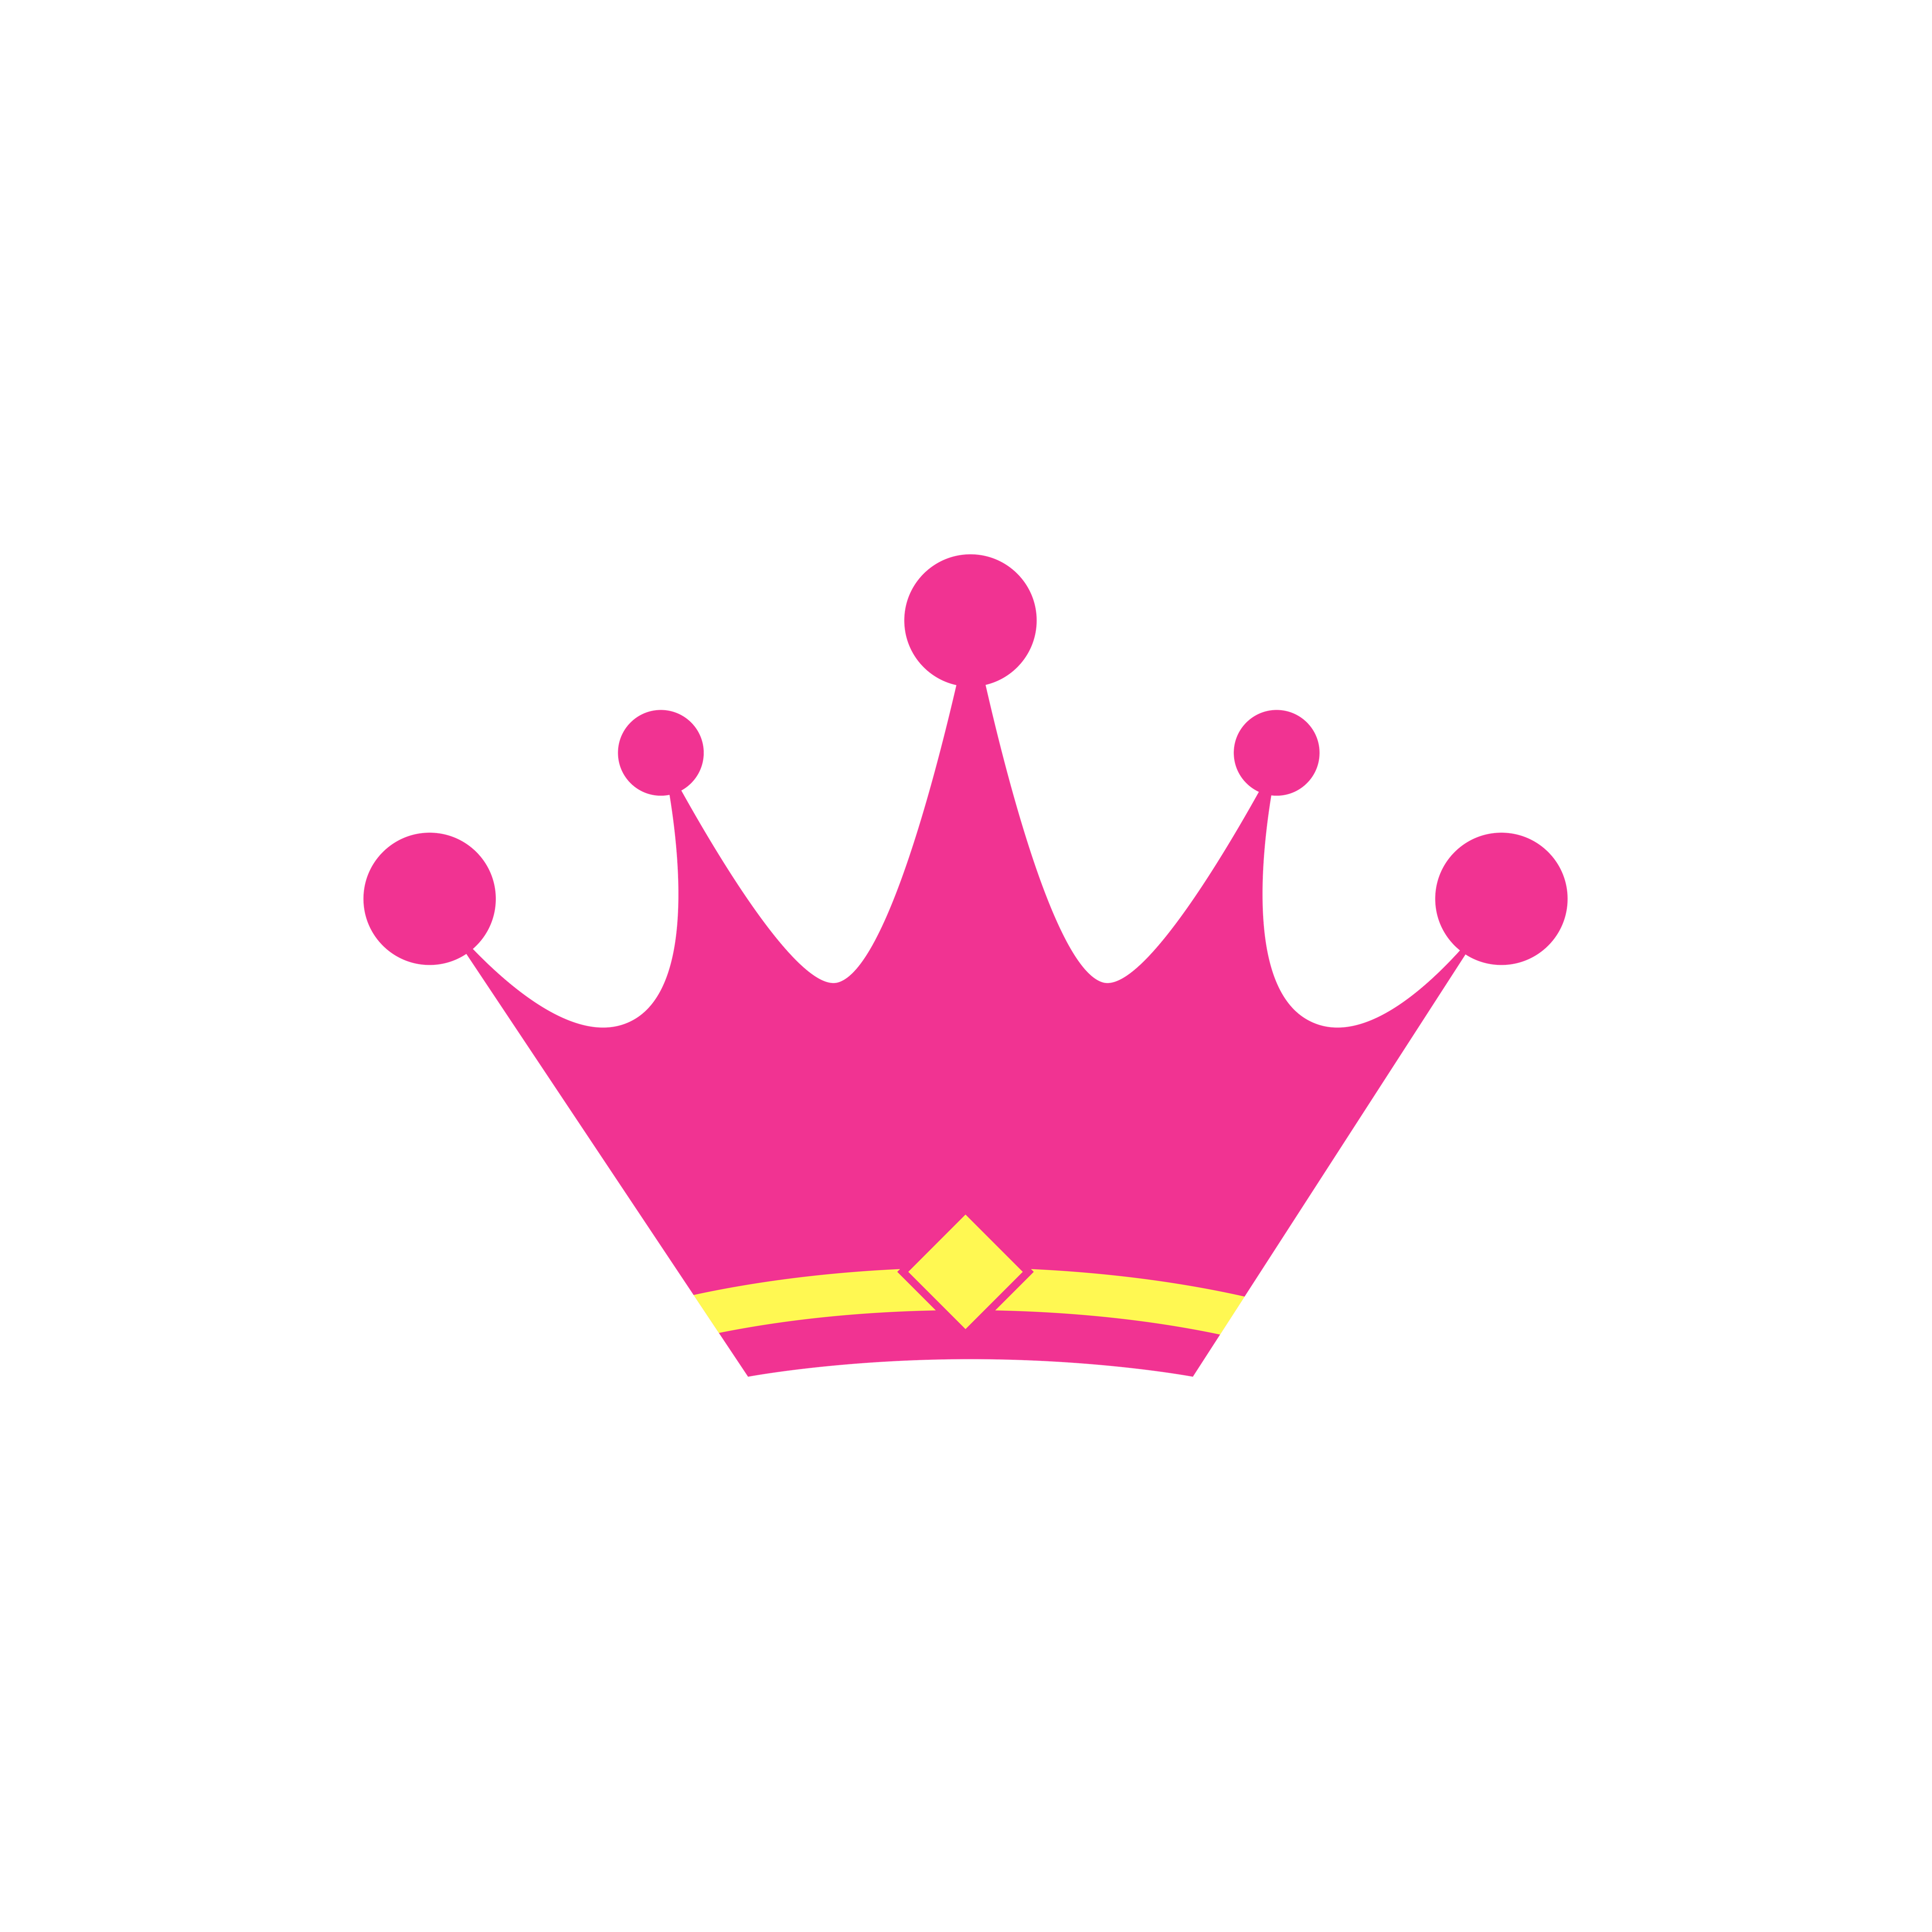 Princess Royal family Graphic design - crown png download - 5000*5000